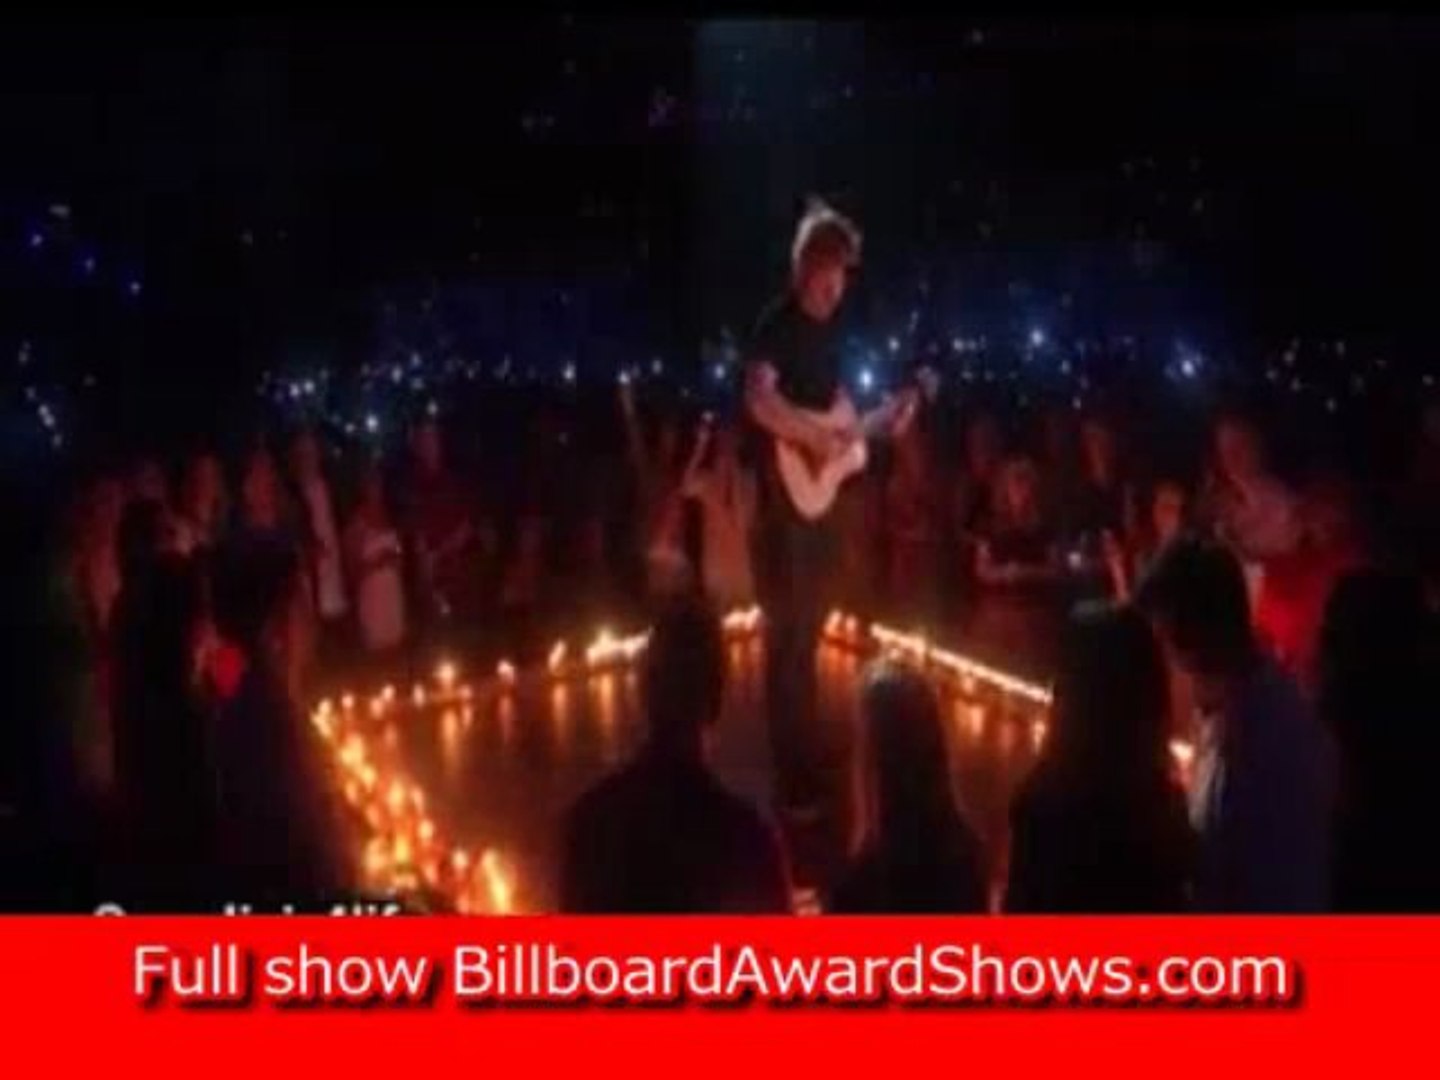 720p Ed Sheeran Billboards 2013 HD live performance